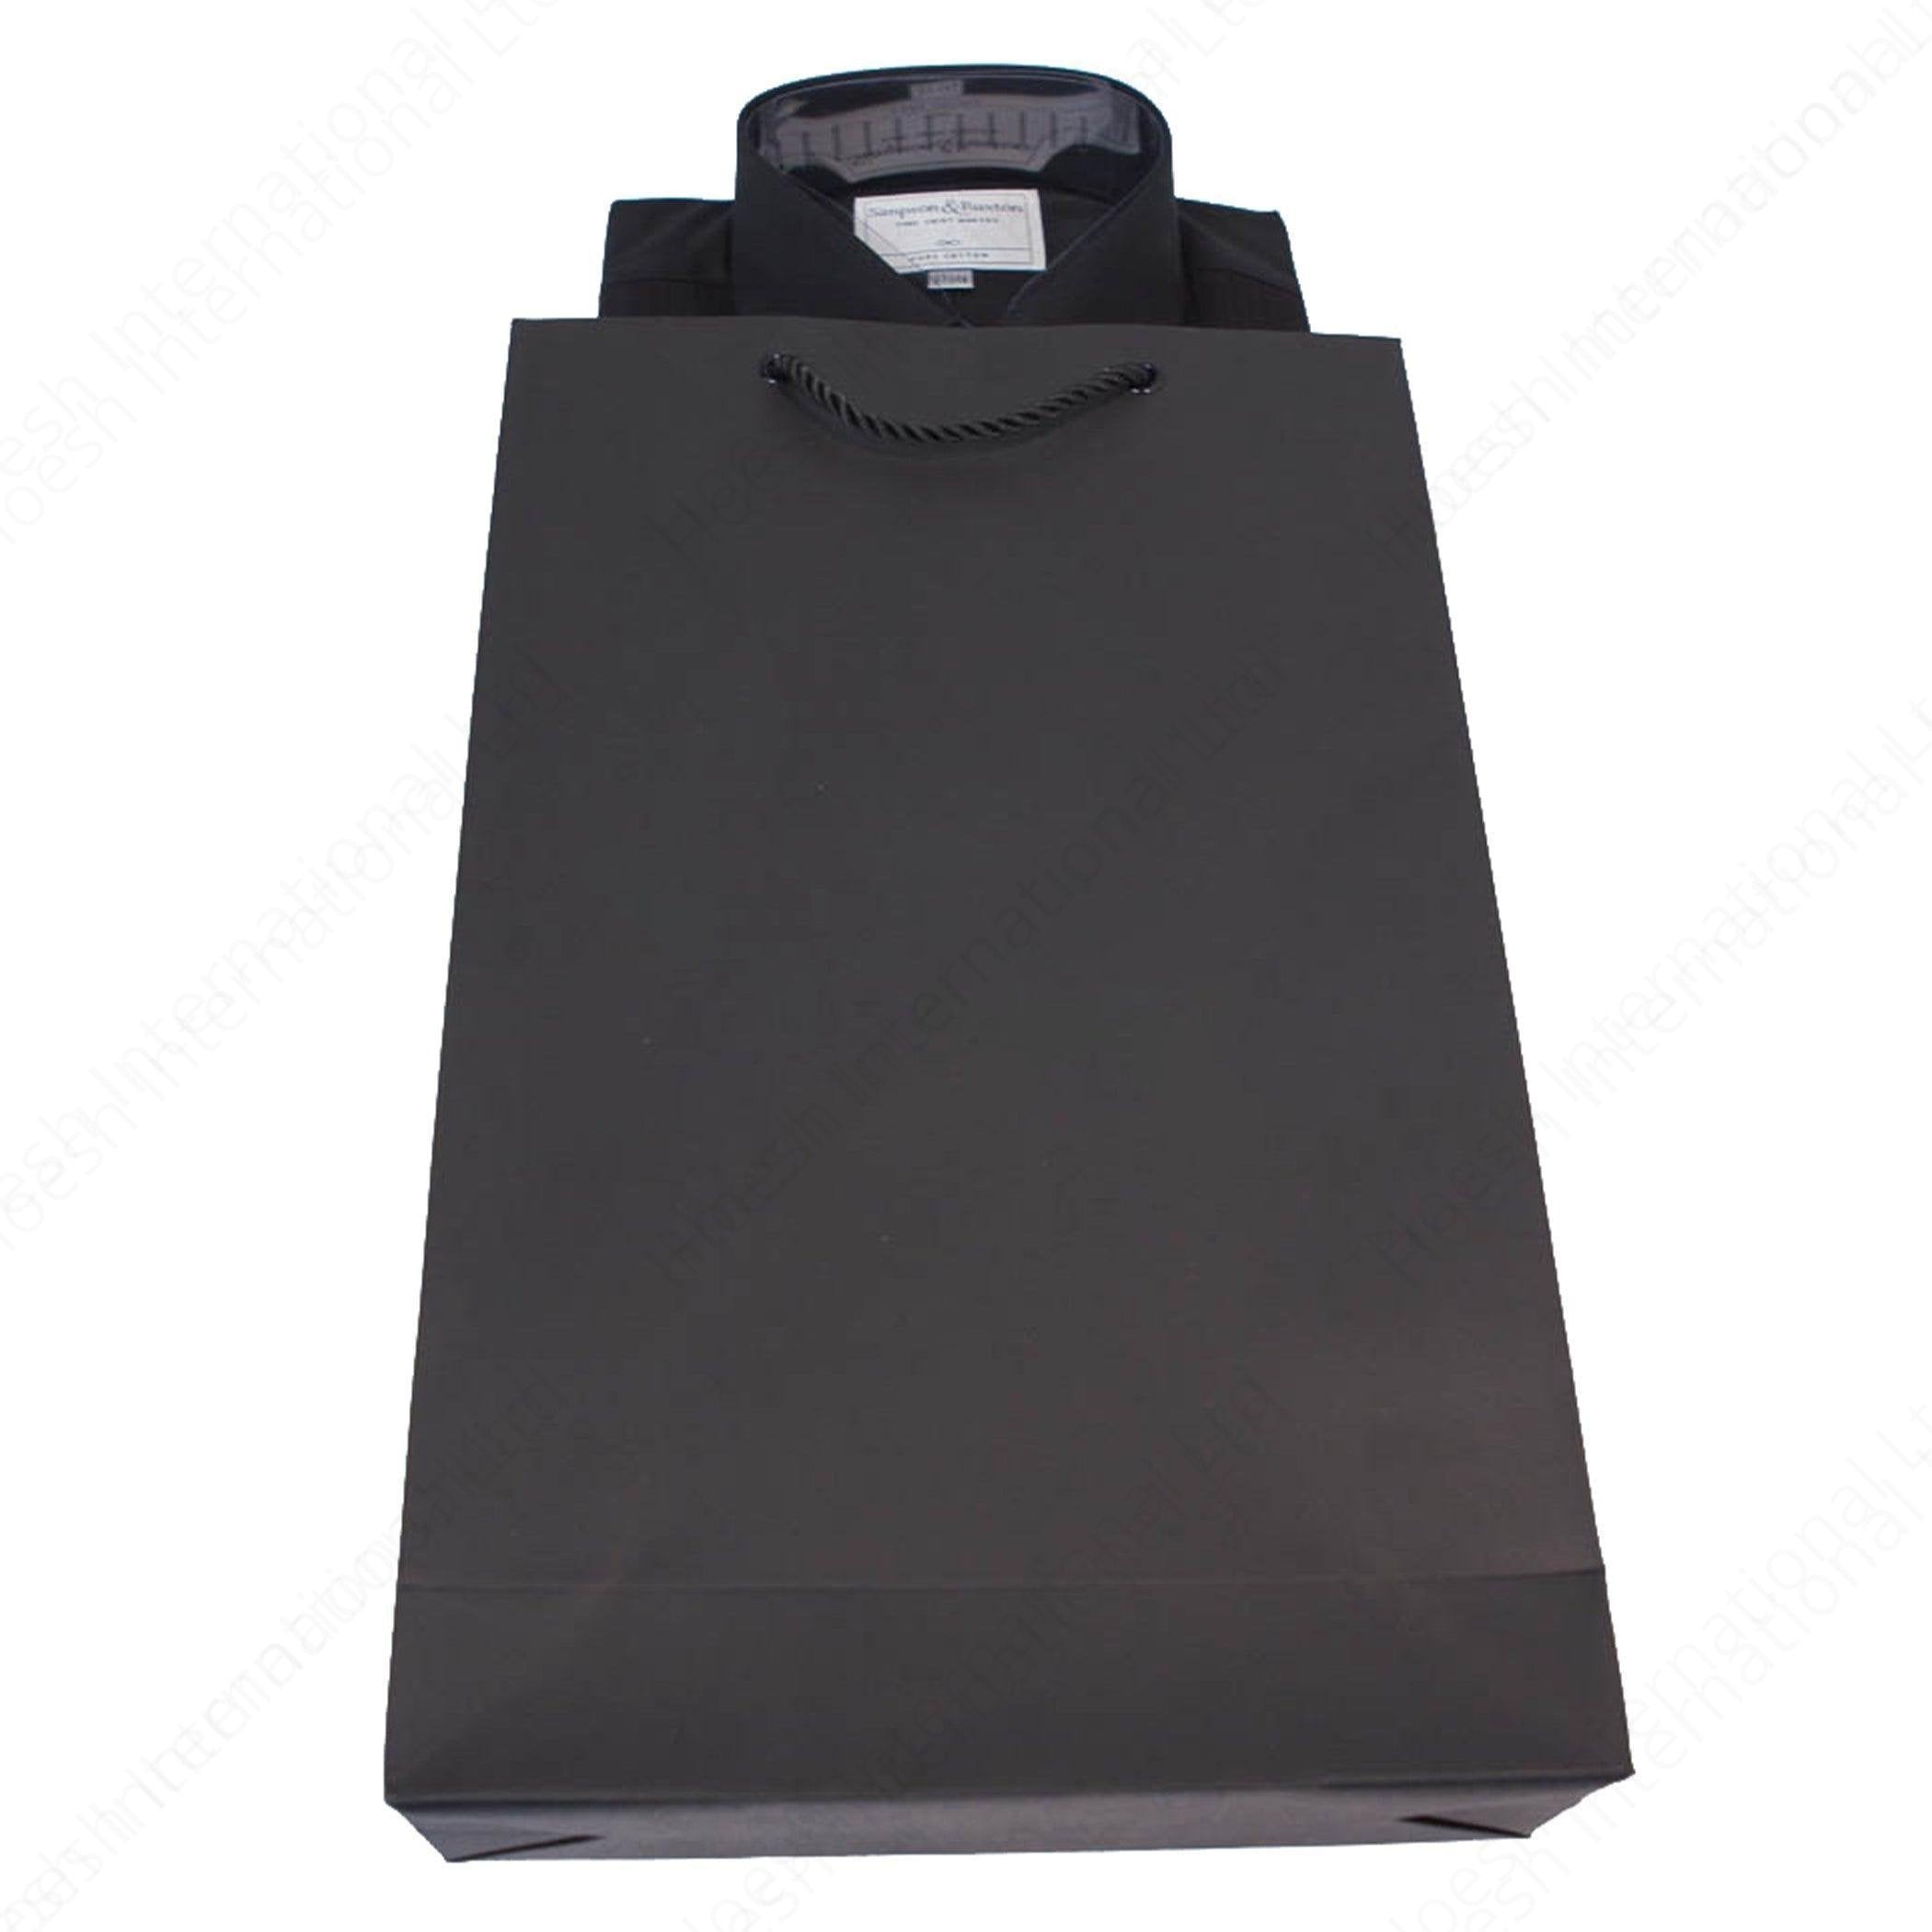 London Kraft Paper Shirt Bags - Hoesh International Ltd